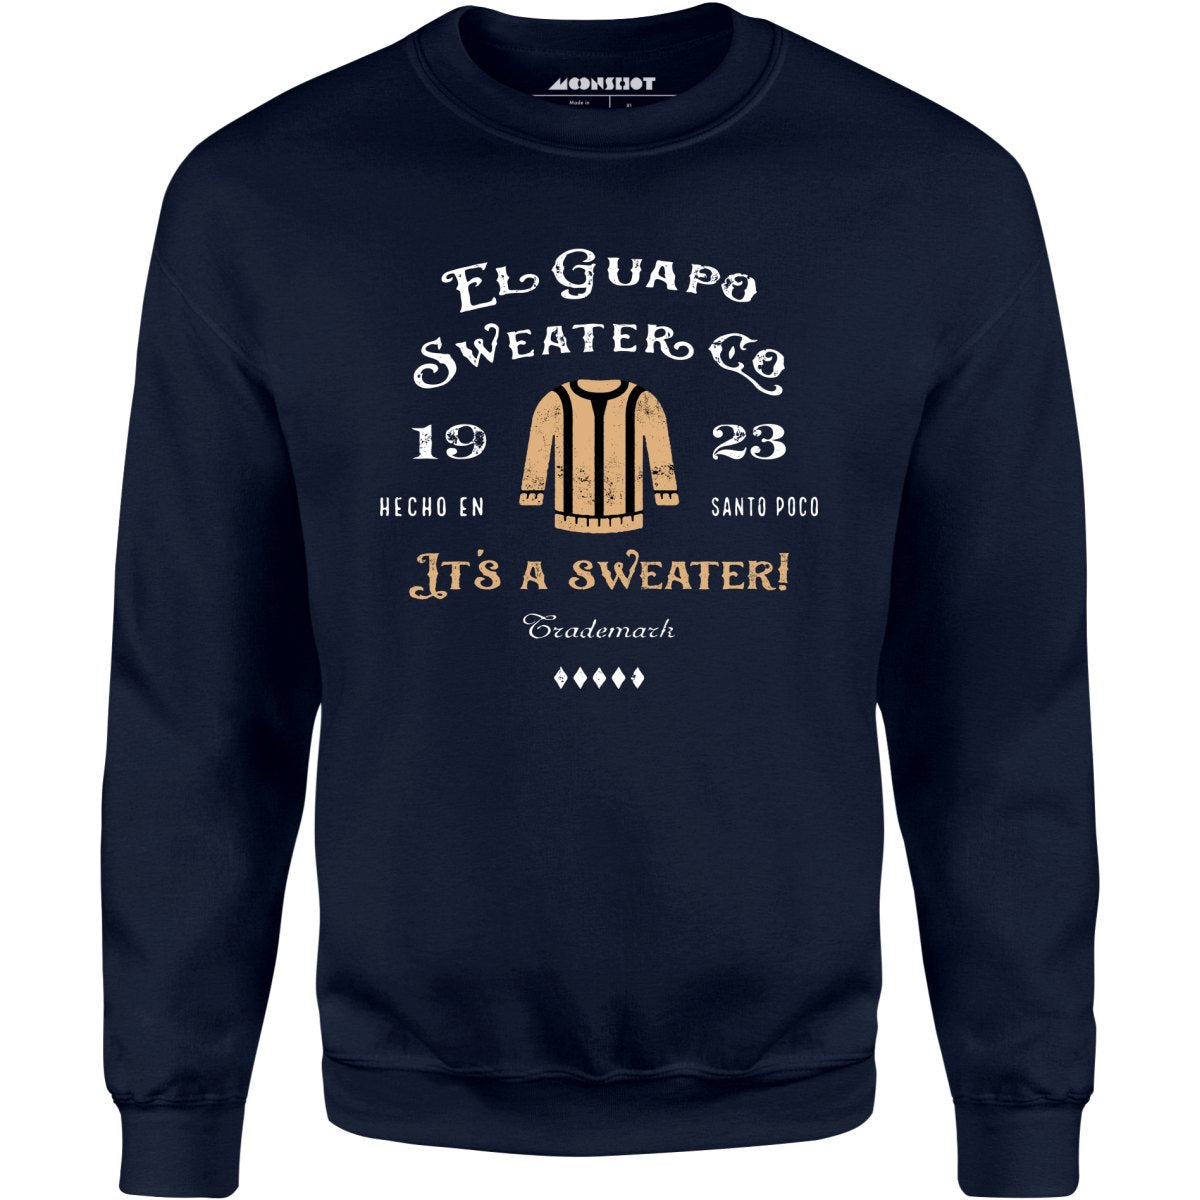 El Guapo Sweater Co. - Unisex Sweatshirt